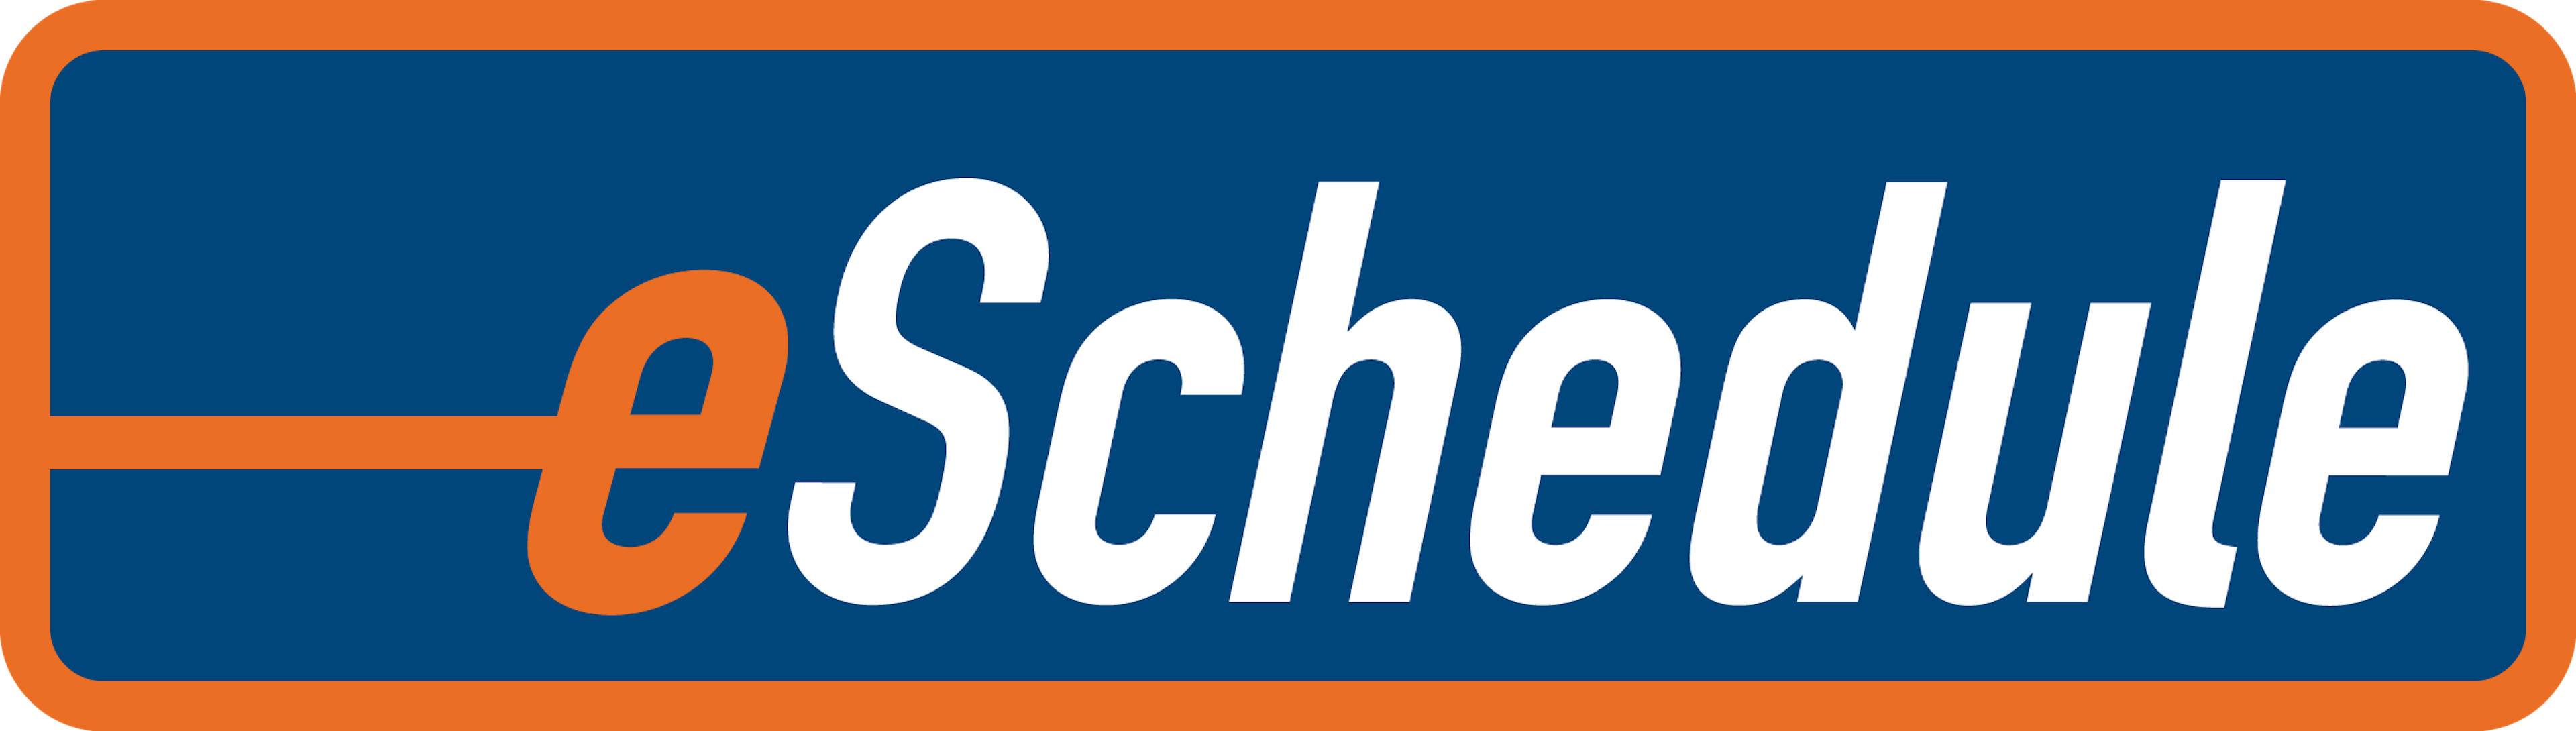 eSchedule Logo